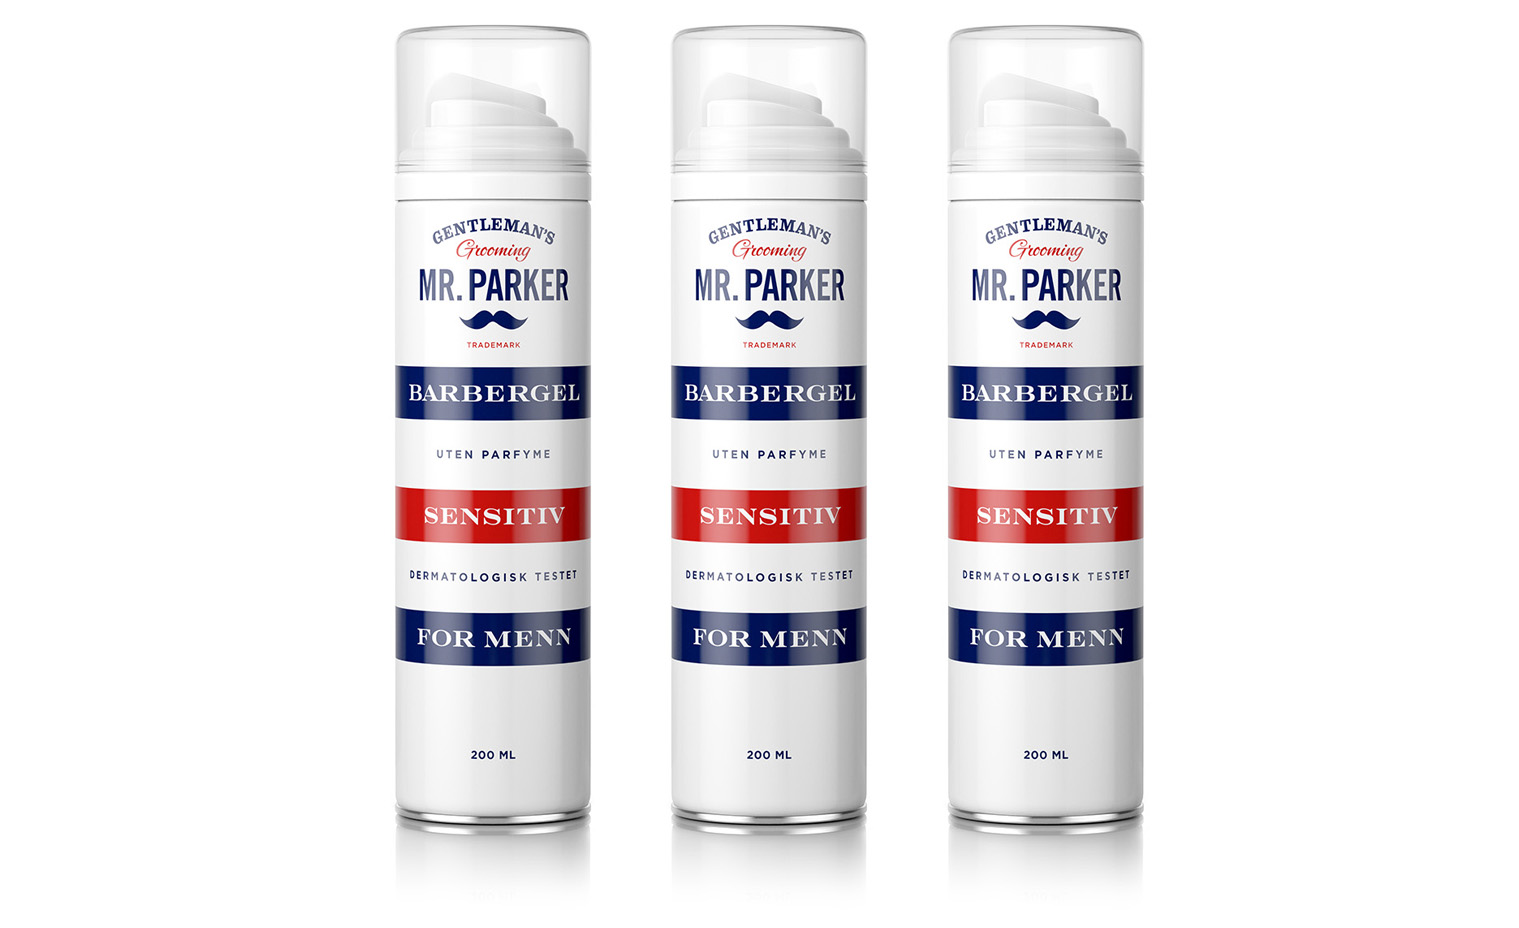 Mr. Parker Gentlemans grooming barbergel shaving gel. Emballasje packaging design.